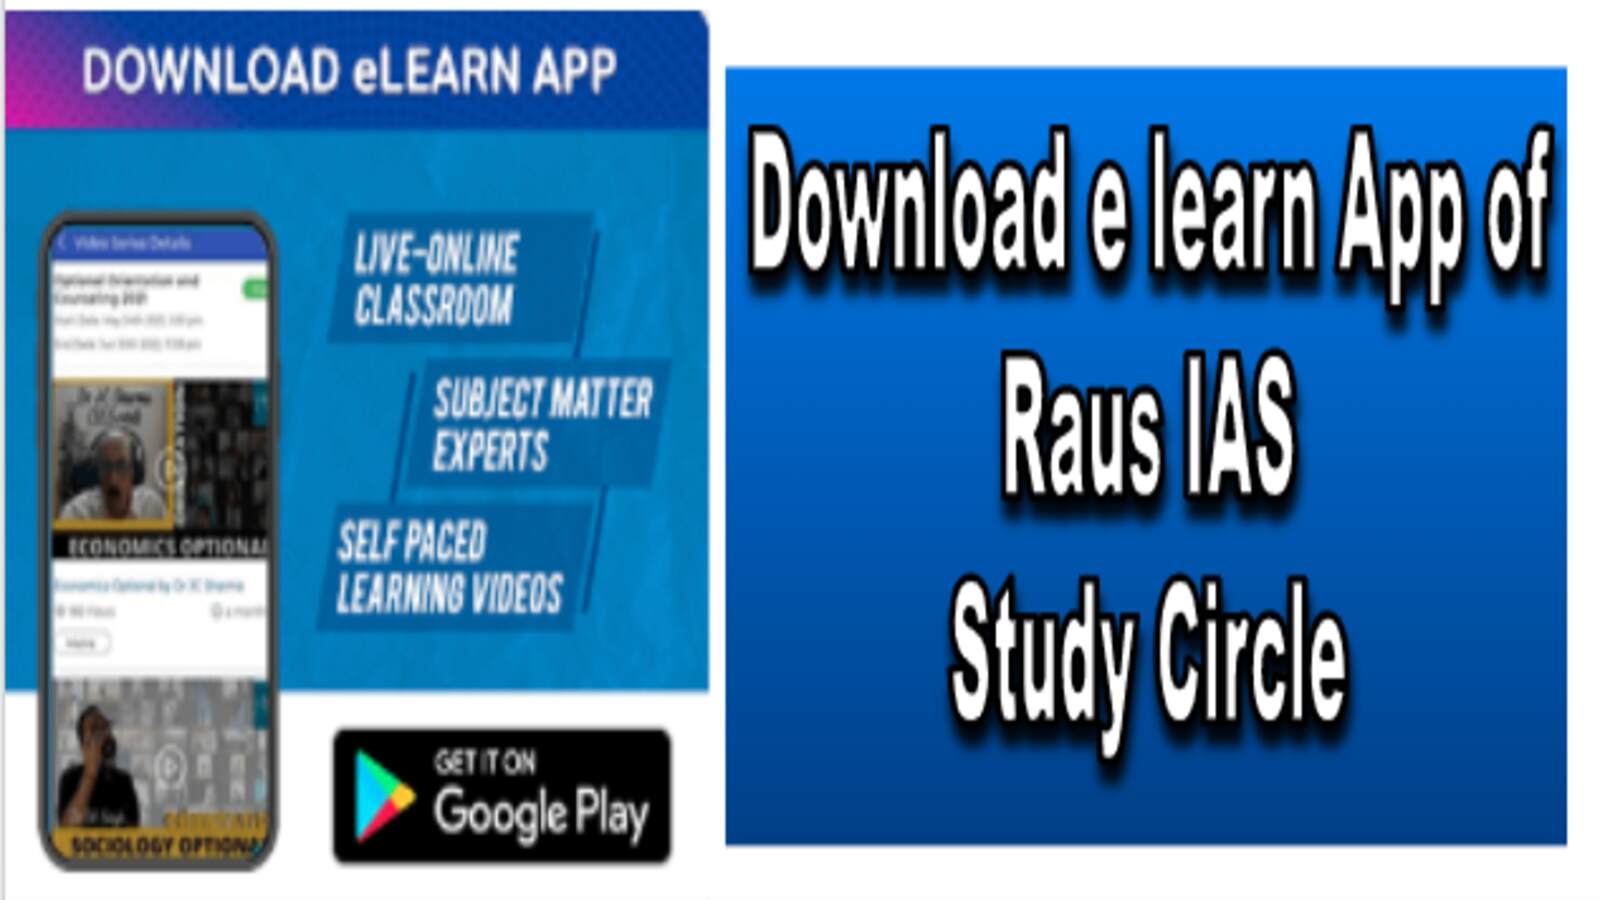 Download e learn App Raus IAS Study Circle Delhi Reviews